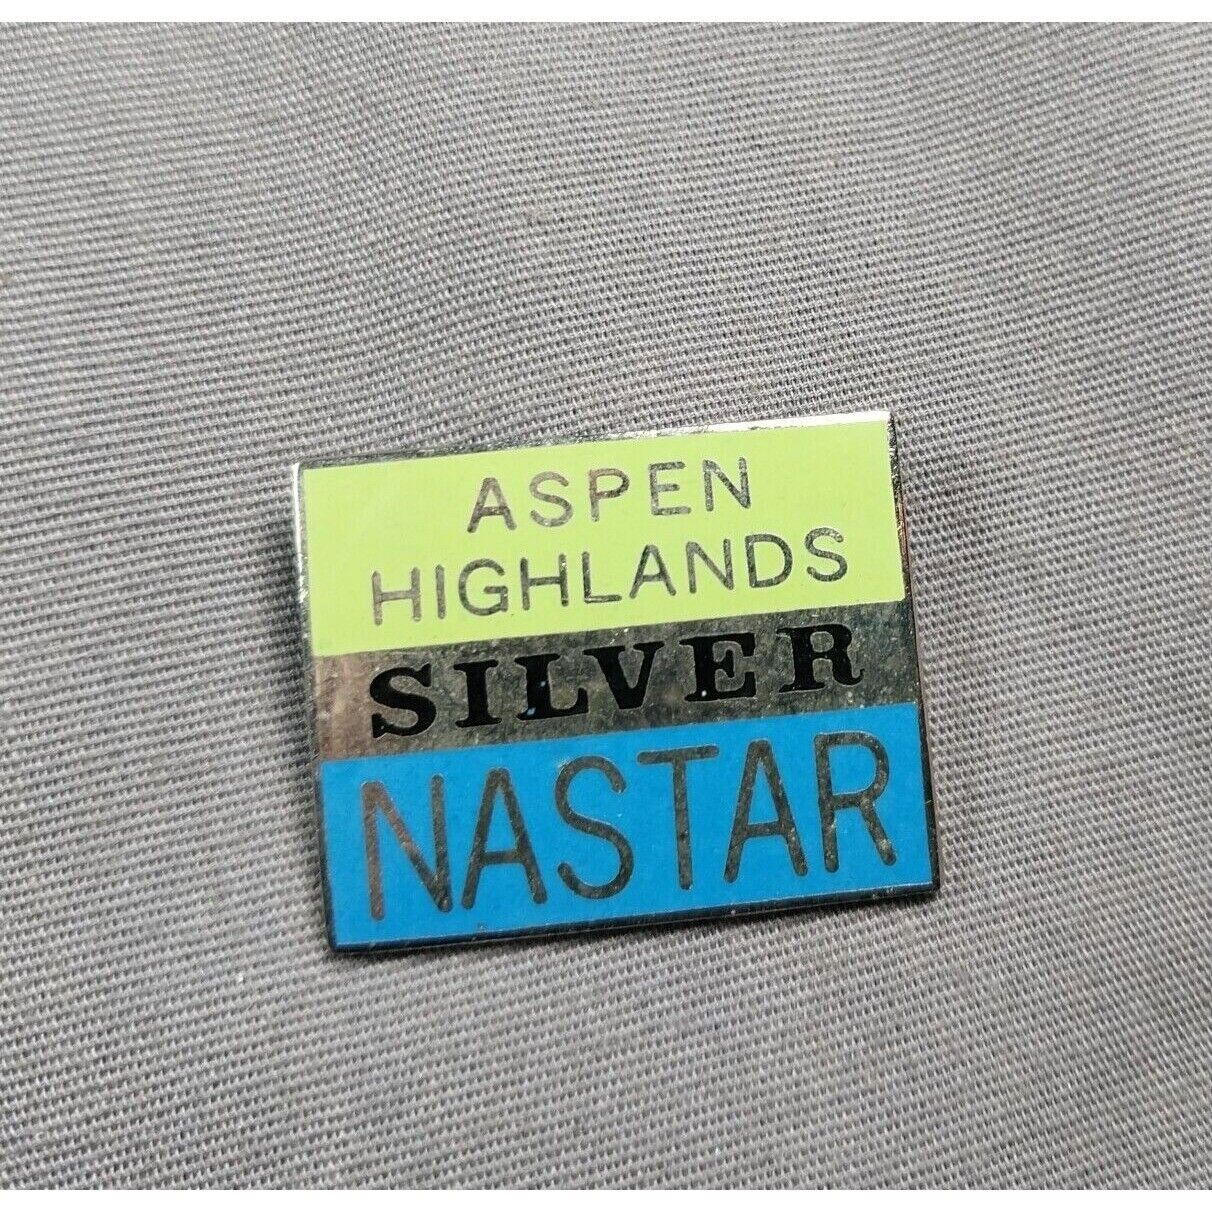 Aspen Highlands CO Colorado Silver NASTAR Skiing Ski Lapel Hat Jacket Pin